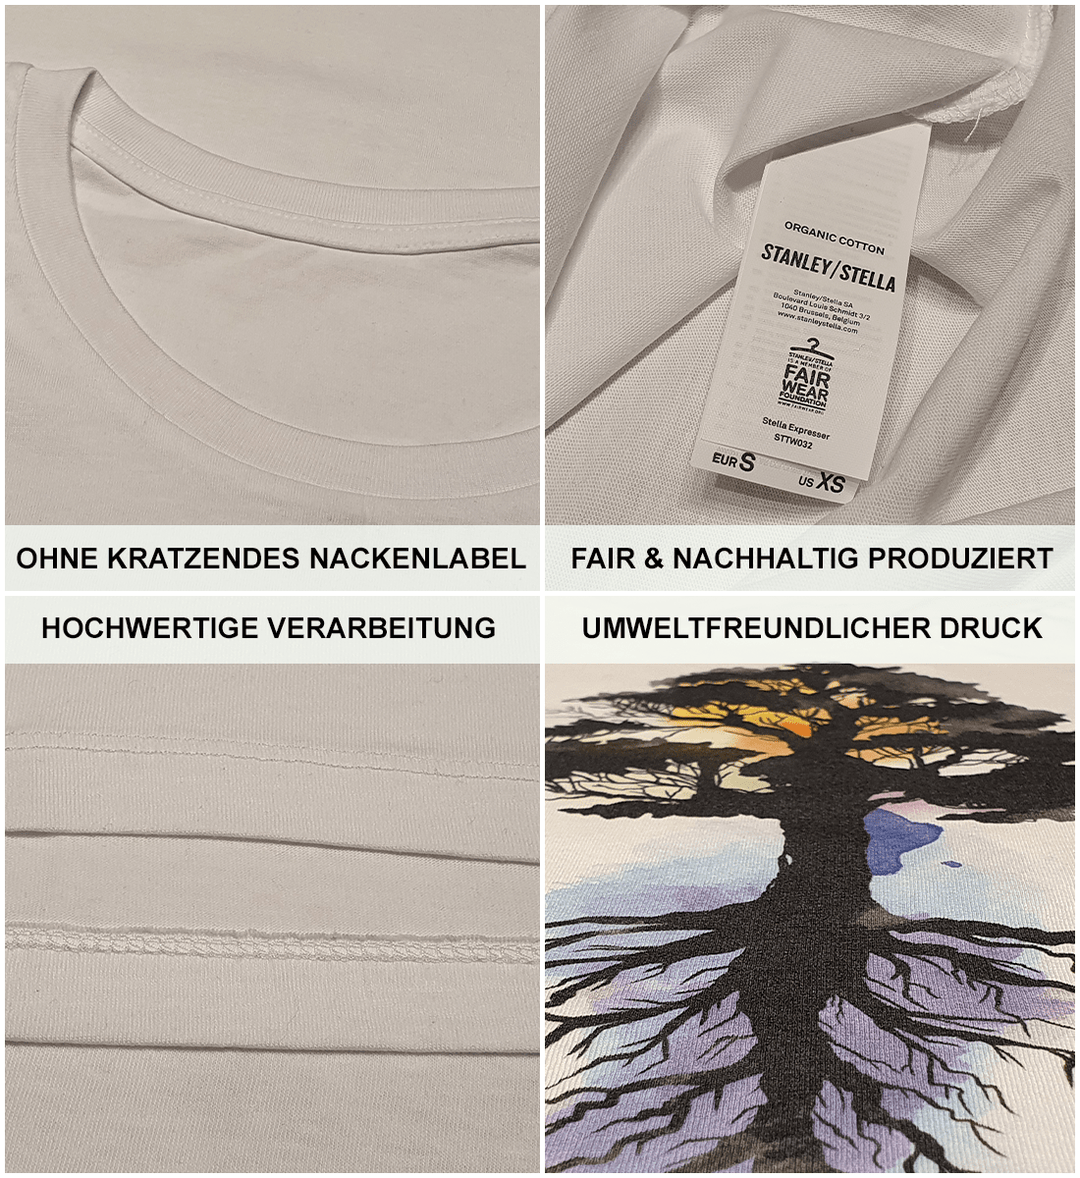 Wald im Dreieck - Damen Premium Bio Shirt